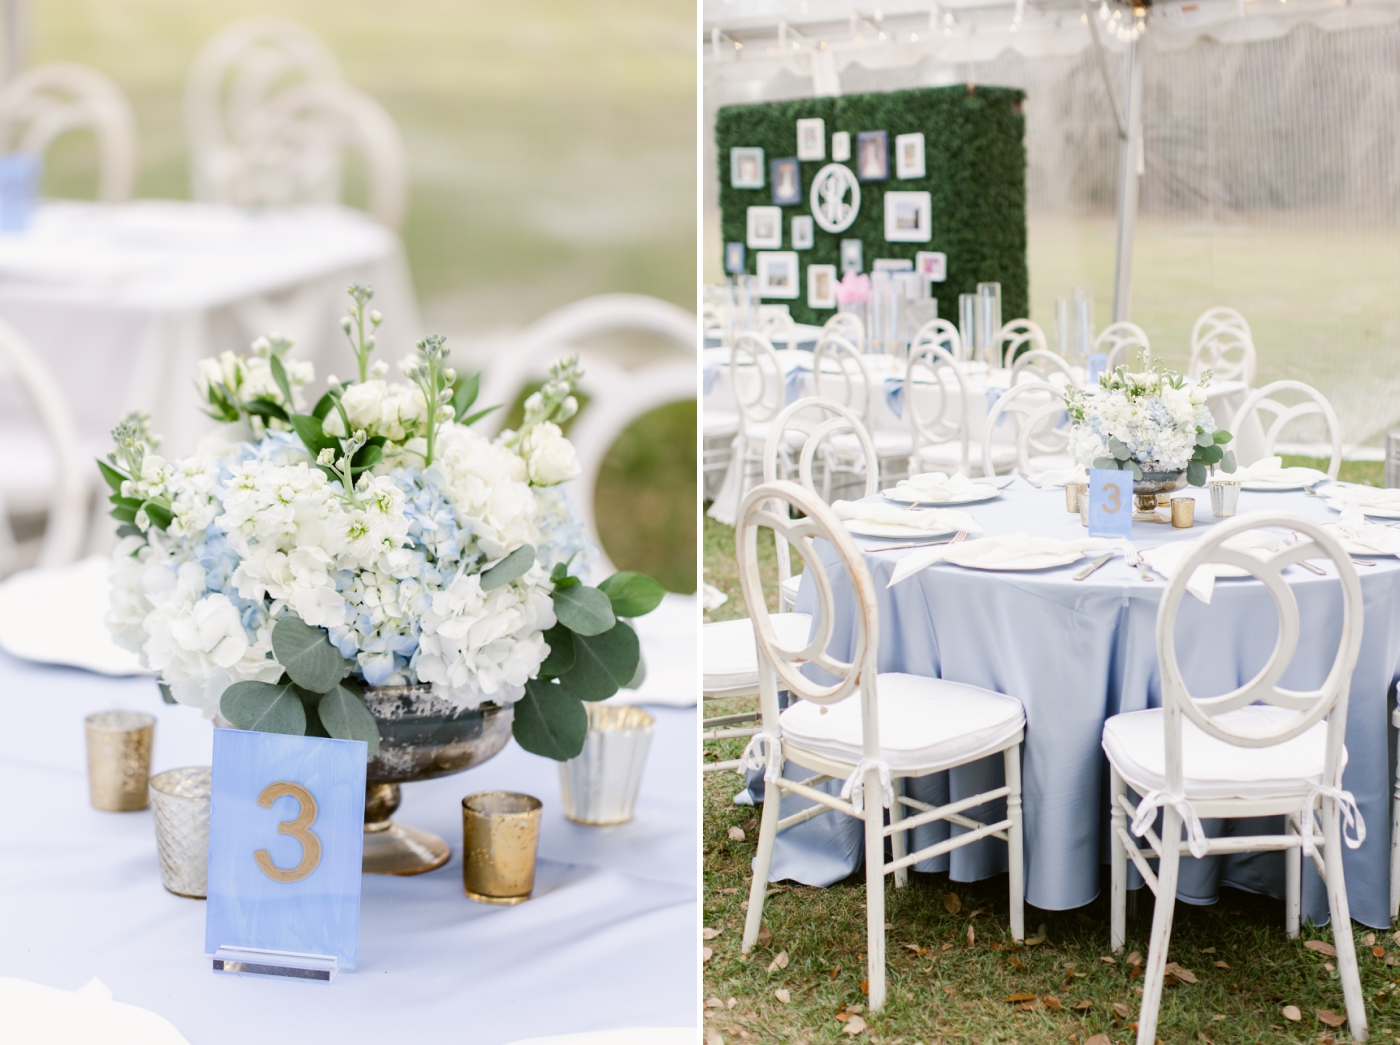 blue details at wedding reception